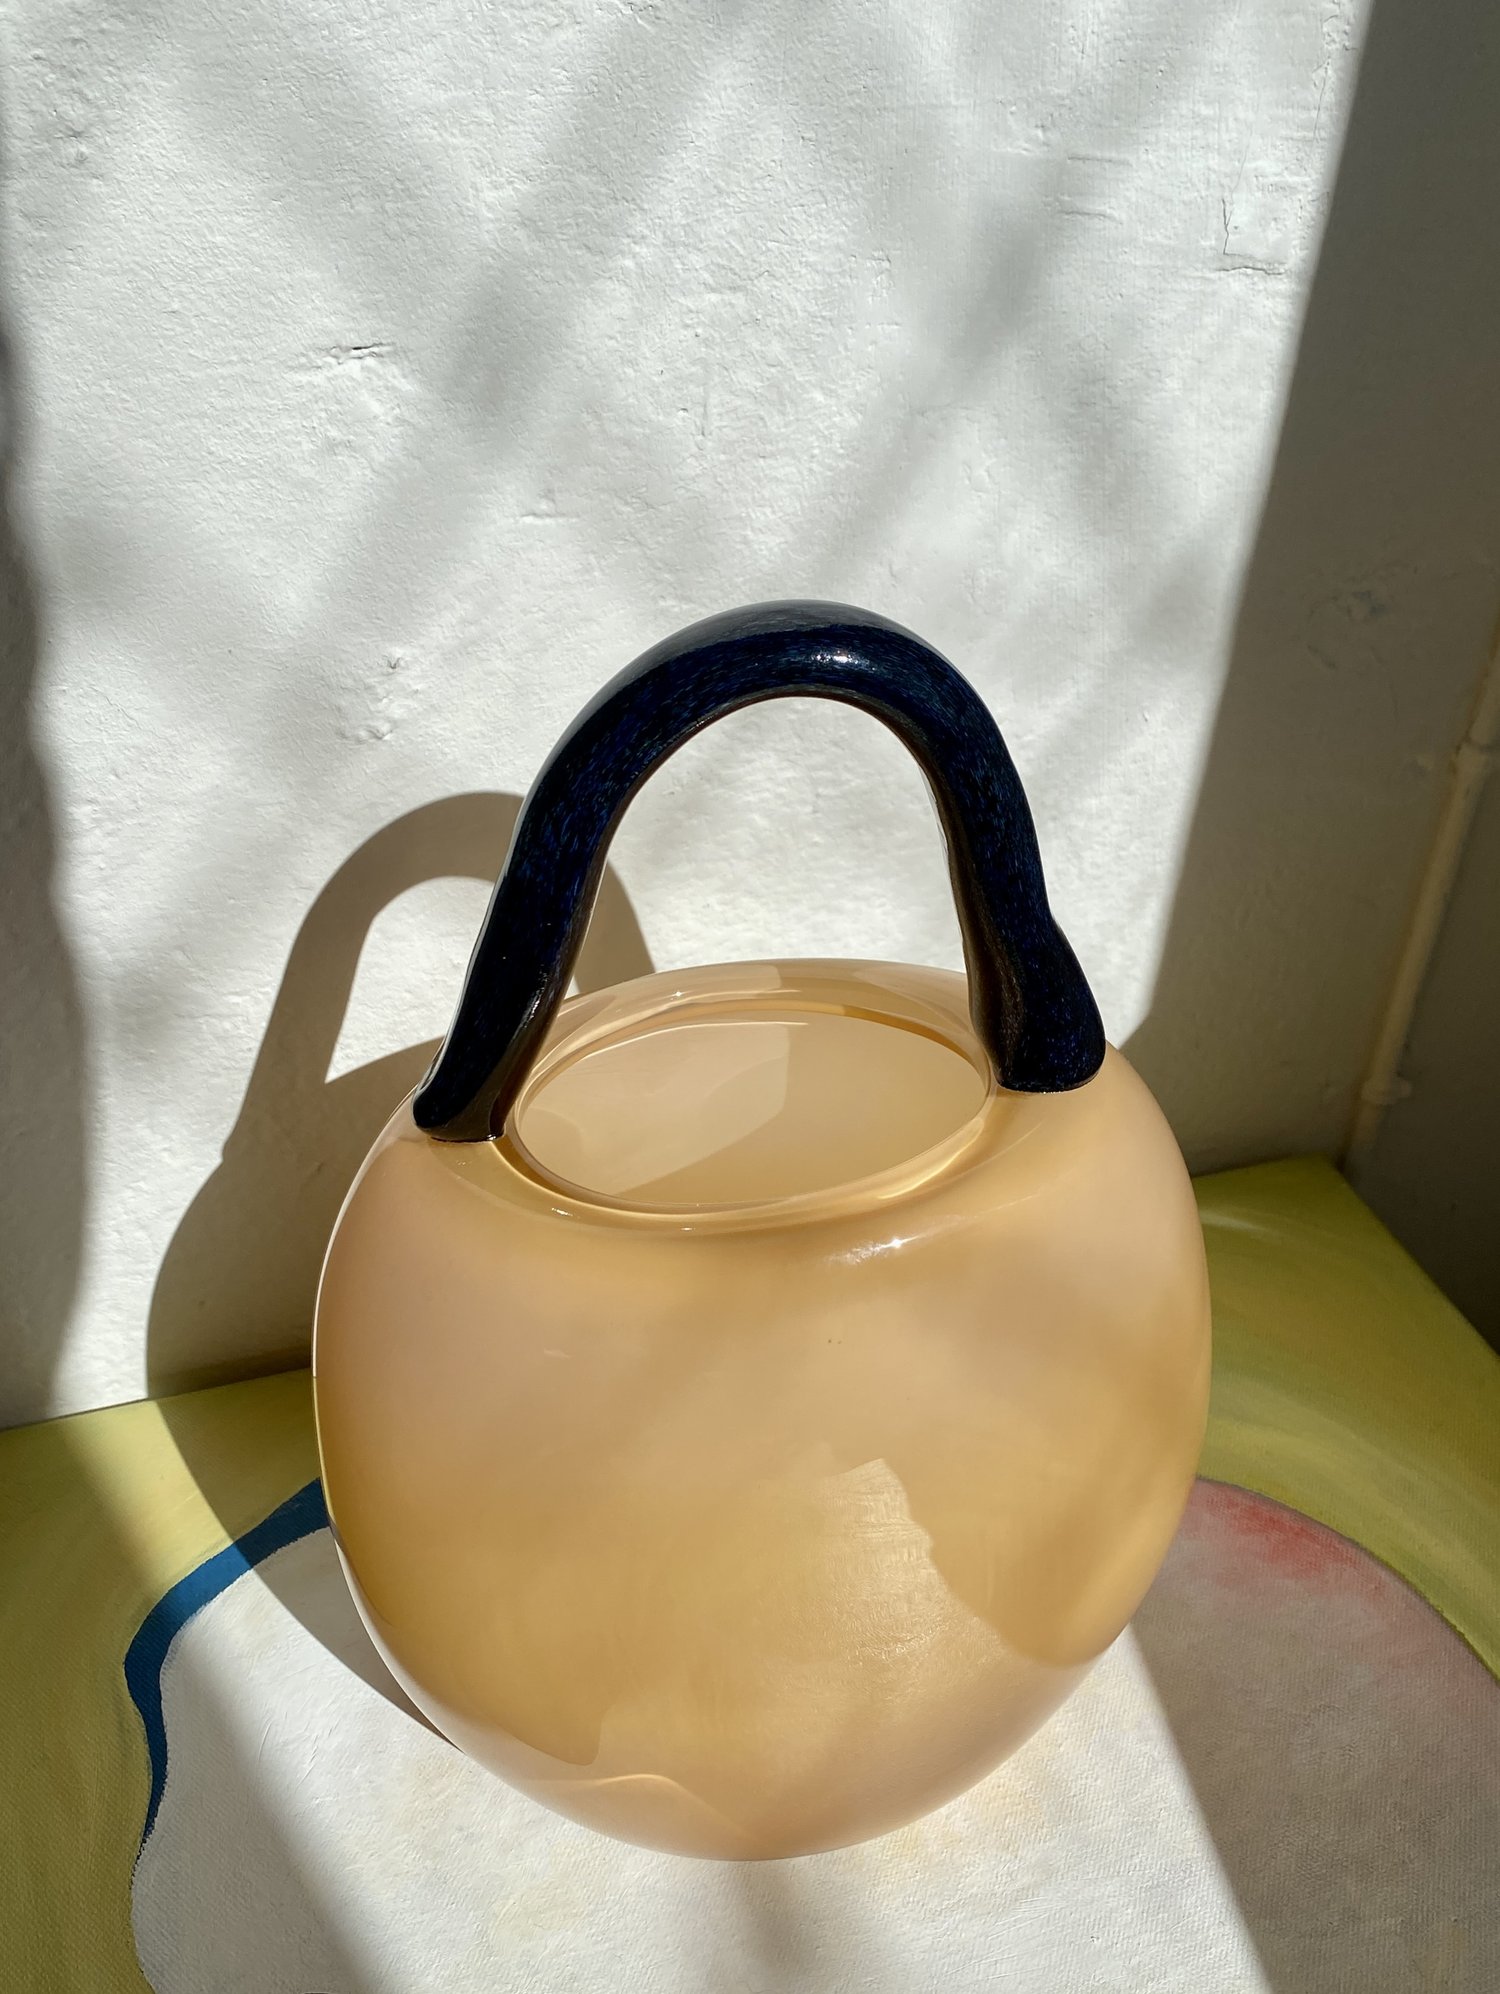 handmade glass vase borsetta lelefantino — L'Elefantino